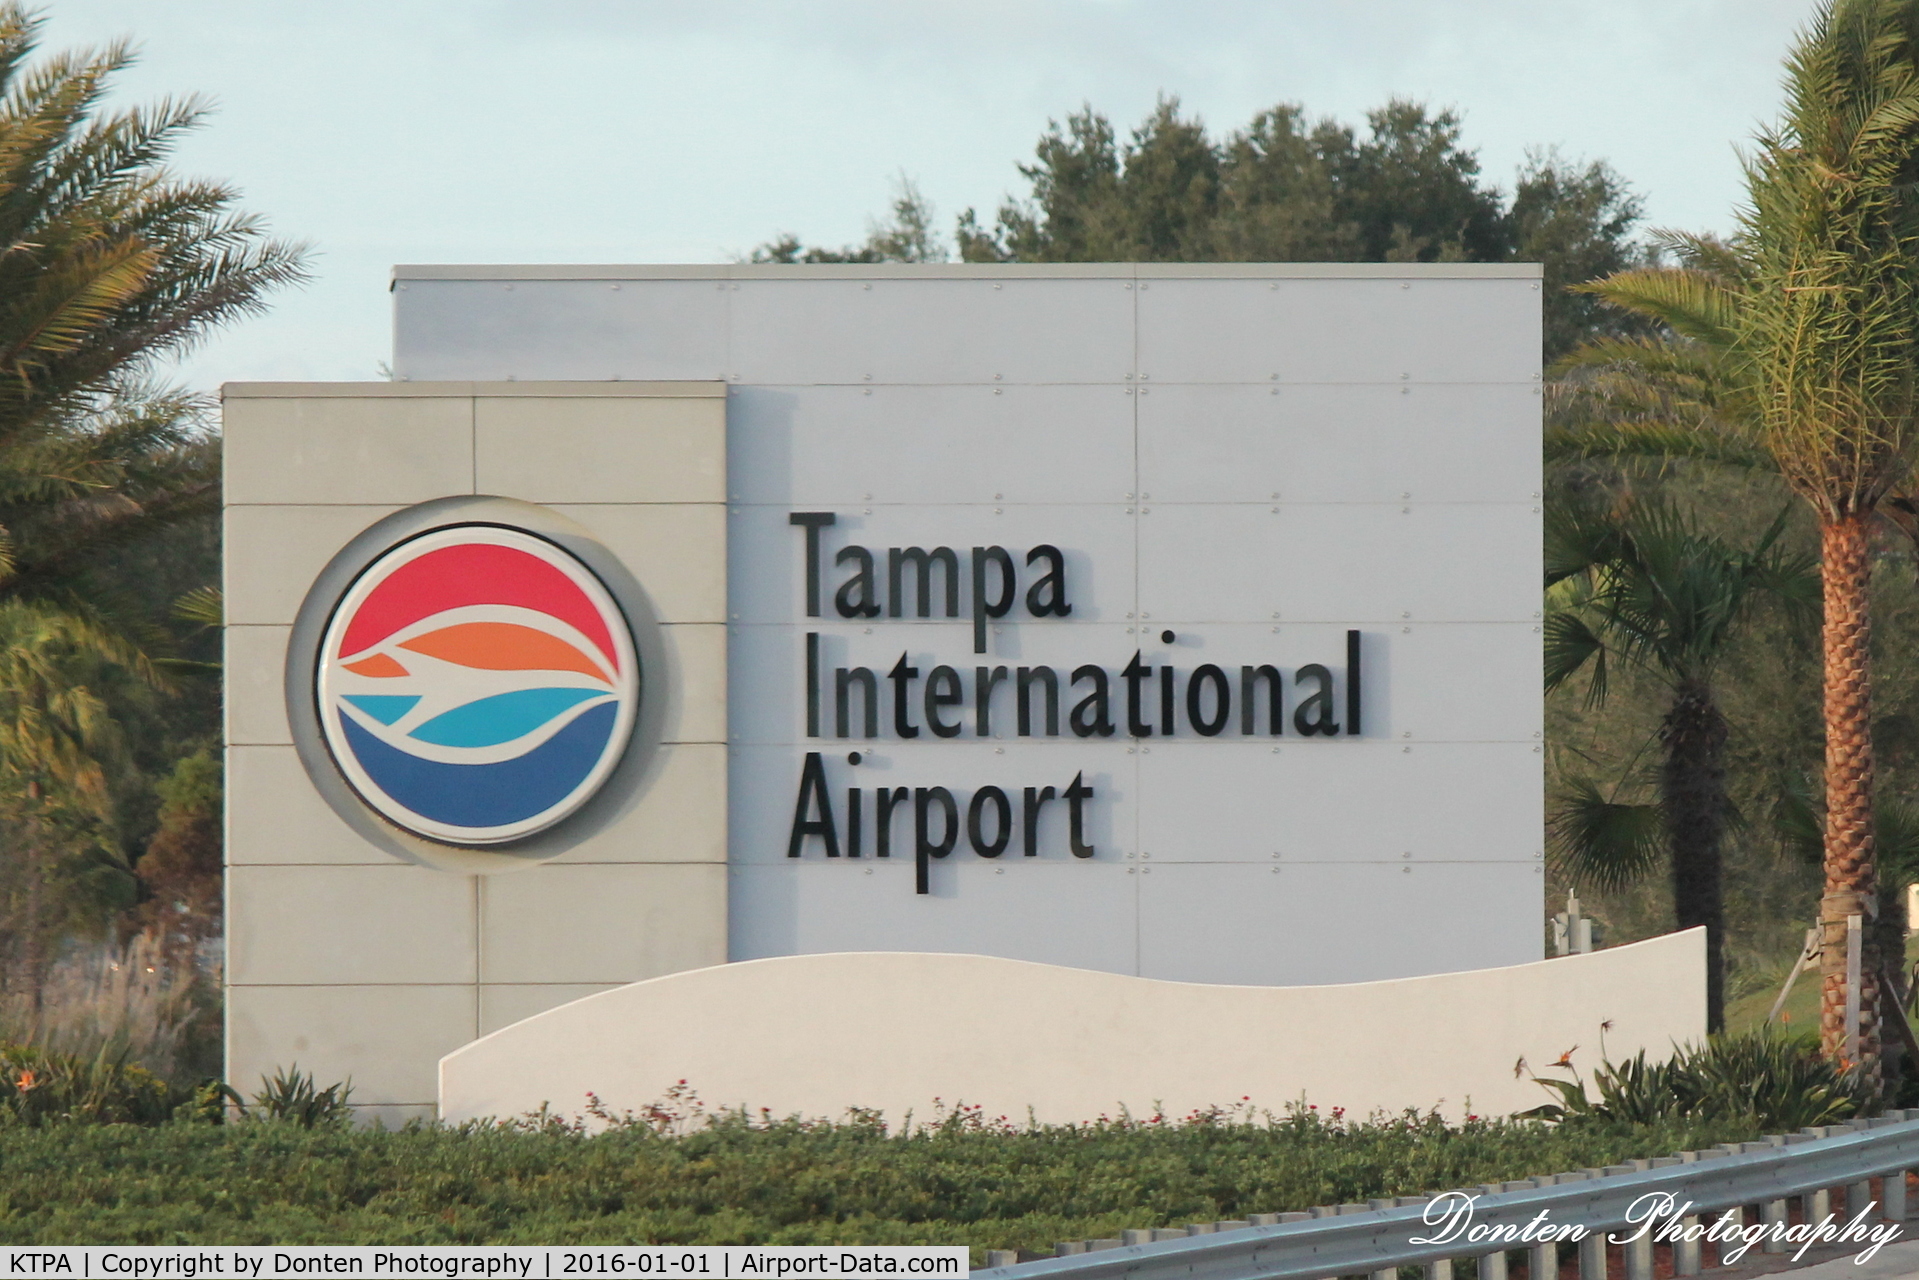 Tampa International Airport (TPA) - Entrance sign to Tampa International Airport